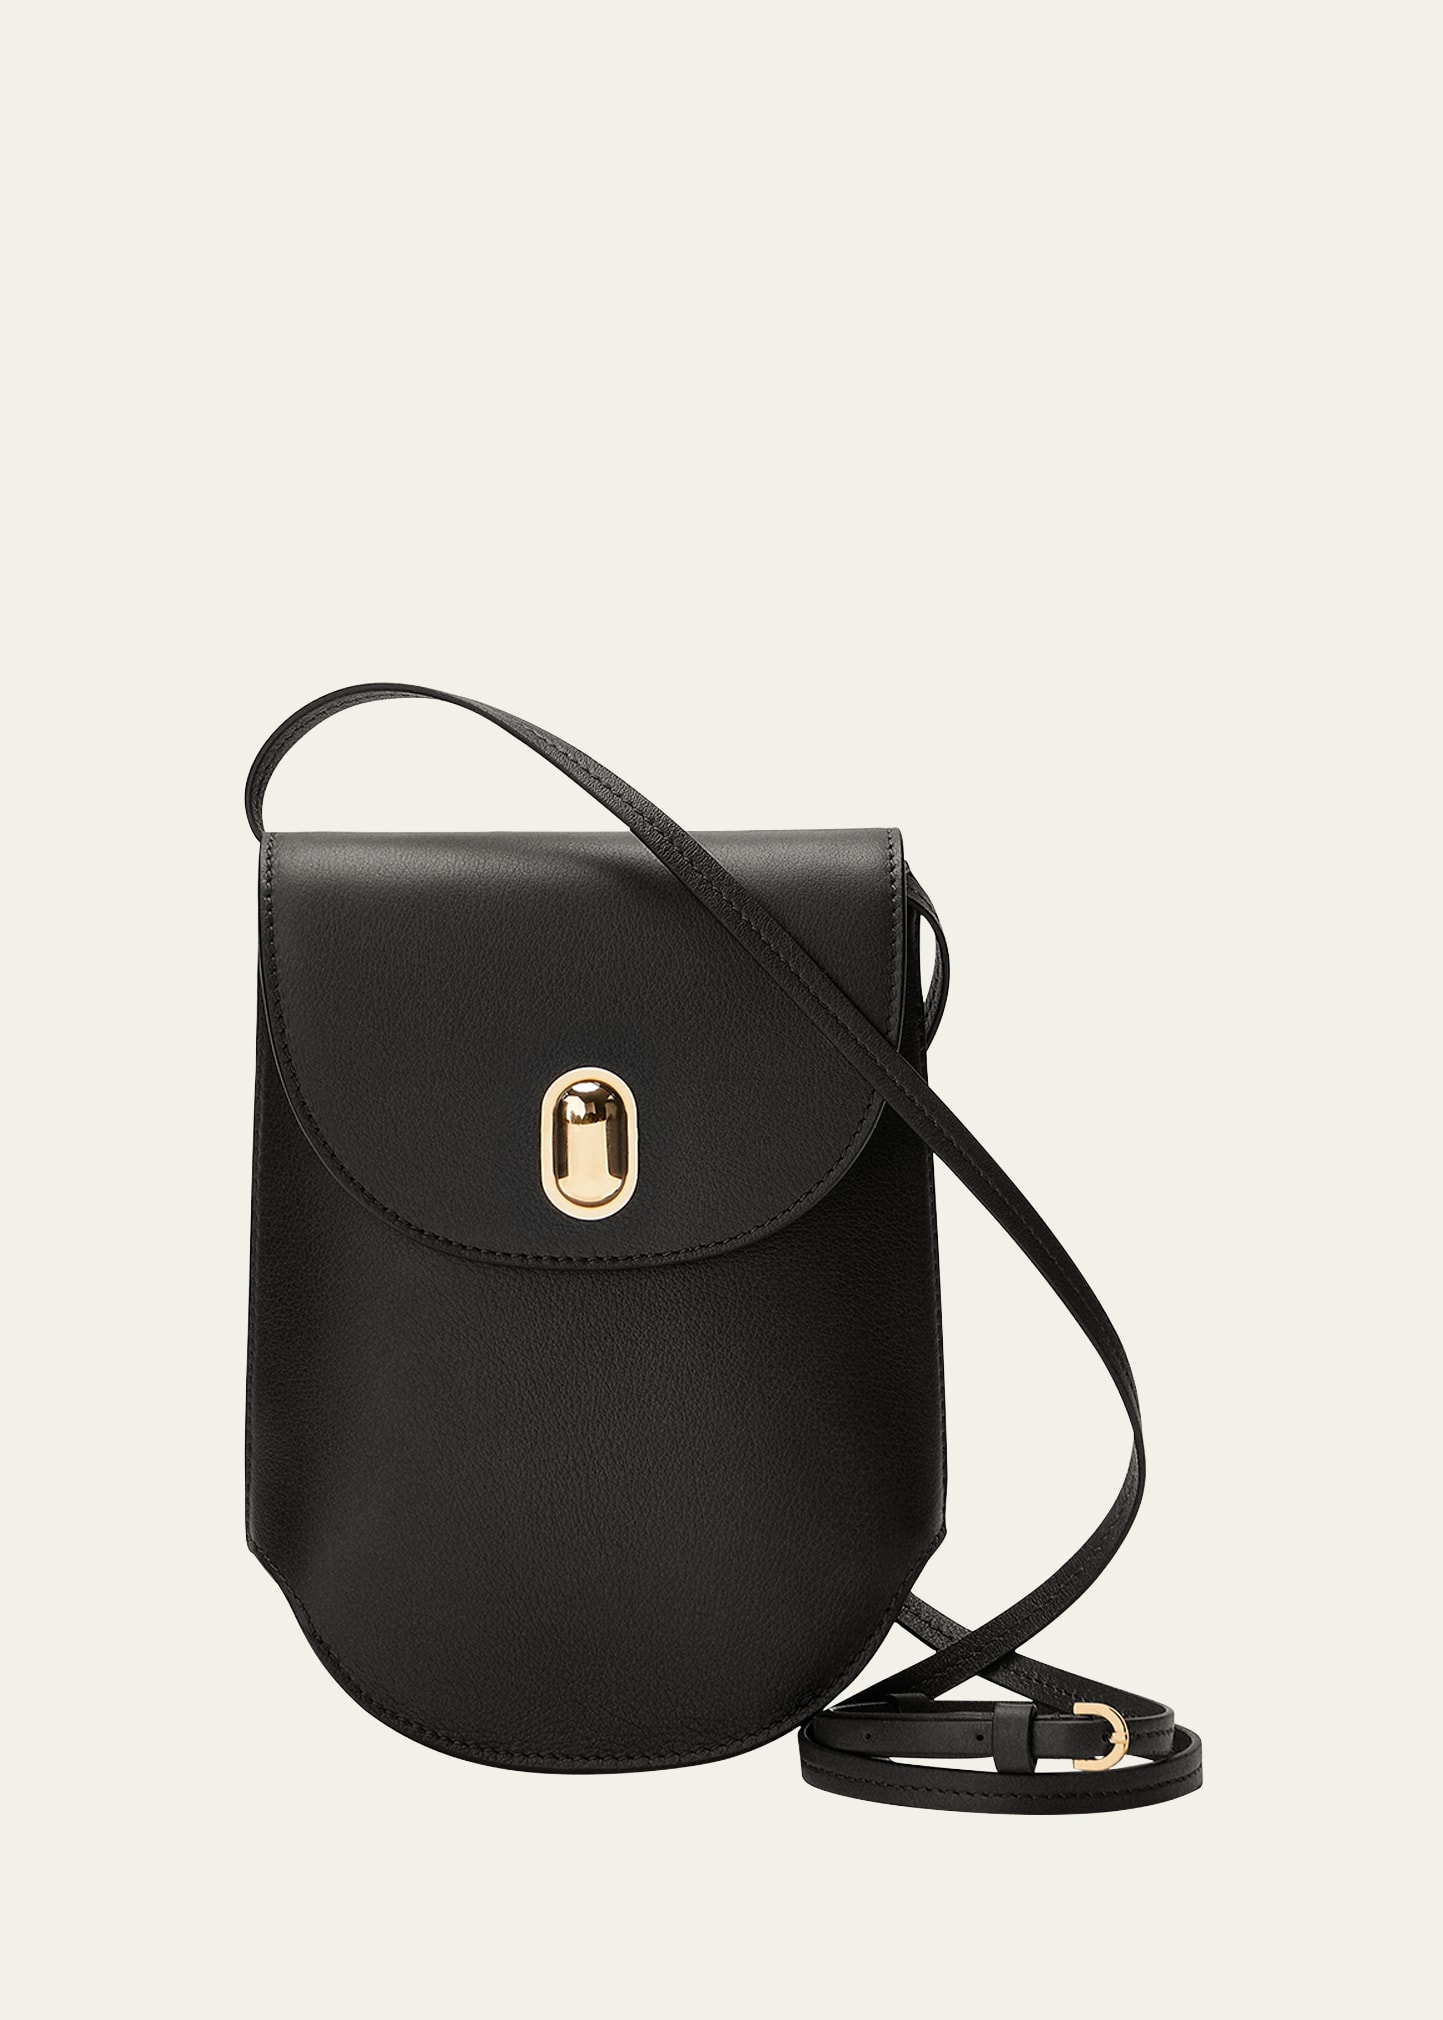 Savette Tondo Pouch Leather Crossbody Bag In Black 001